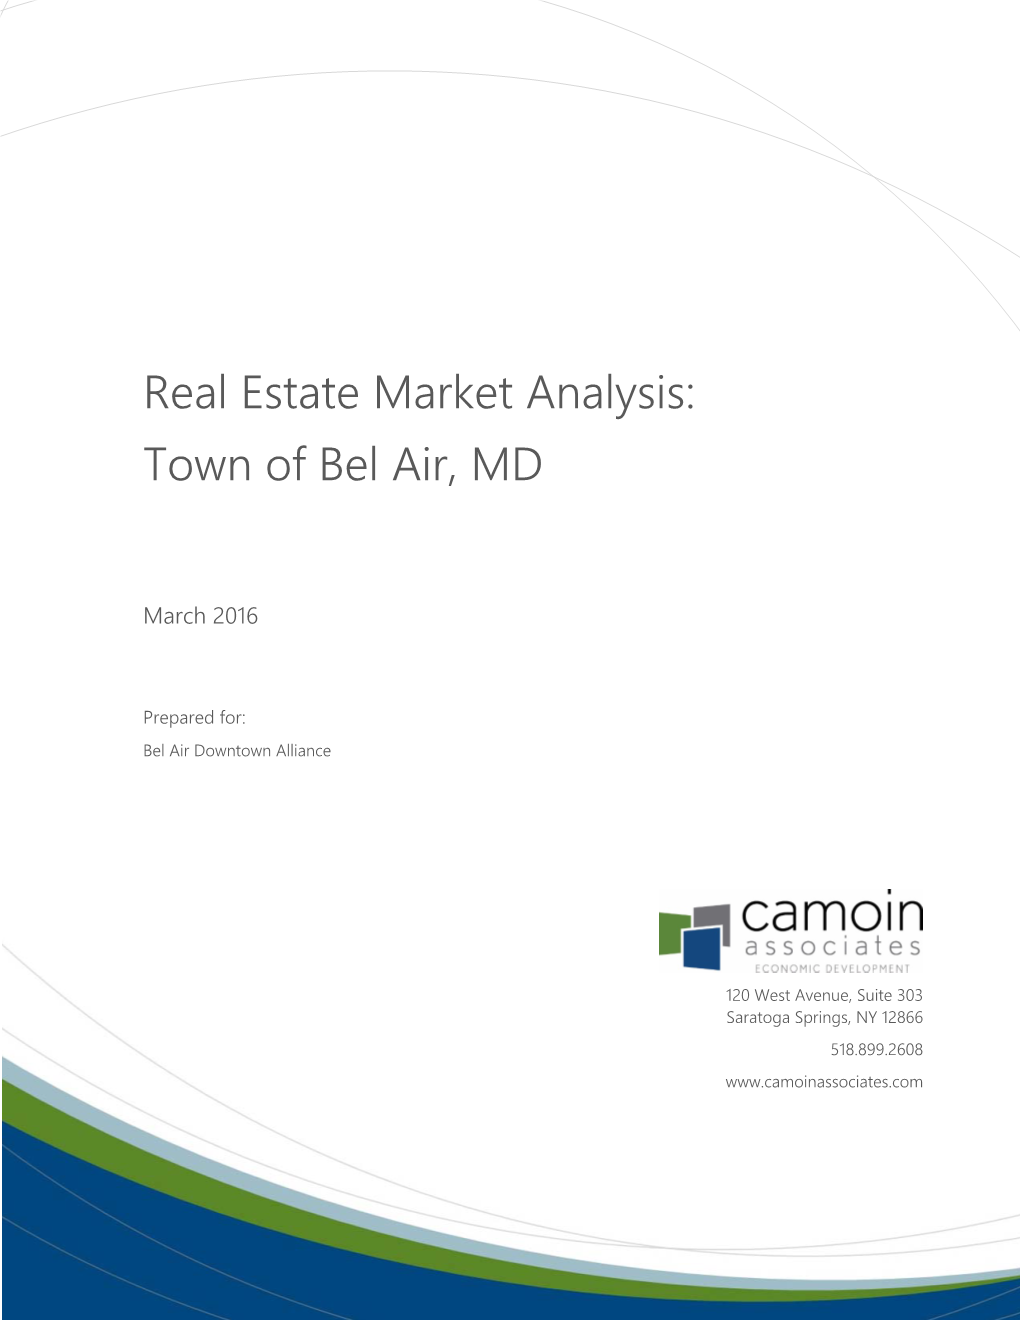 Real Estate Market Analysis: Town of Bel Air, MD